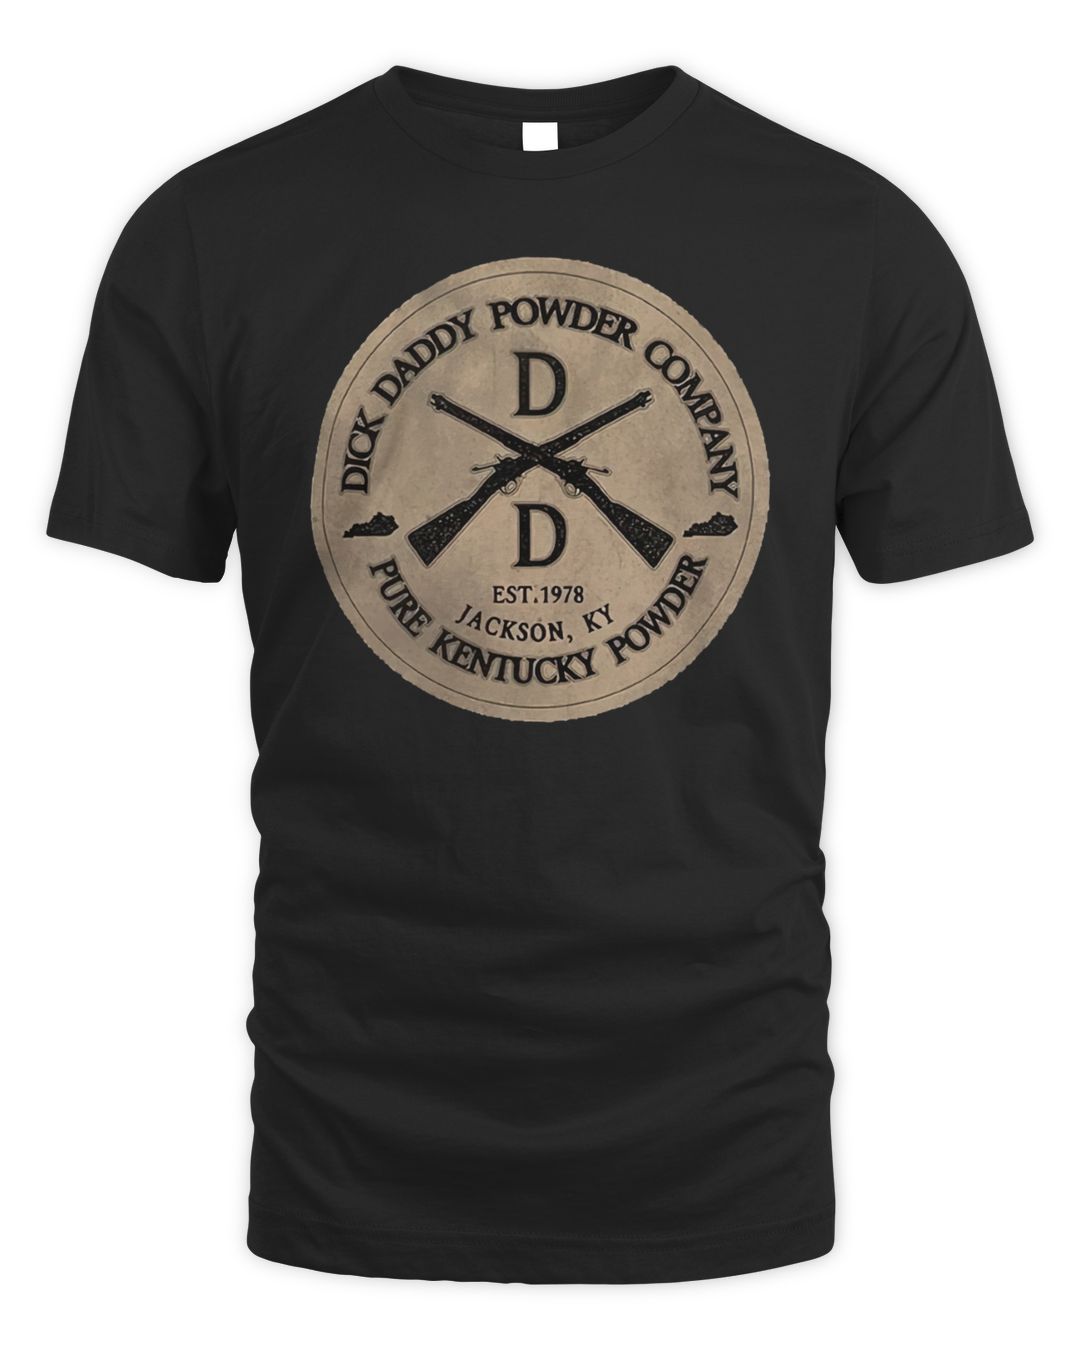 Sturgill Simpson Merch Dick Daddy Powder Company Shirt